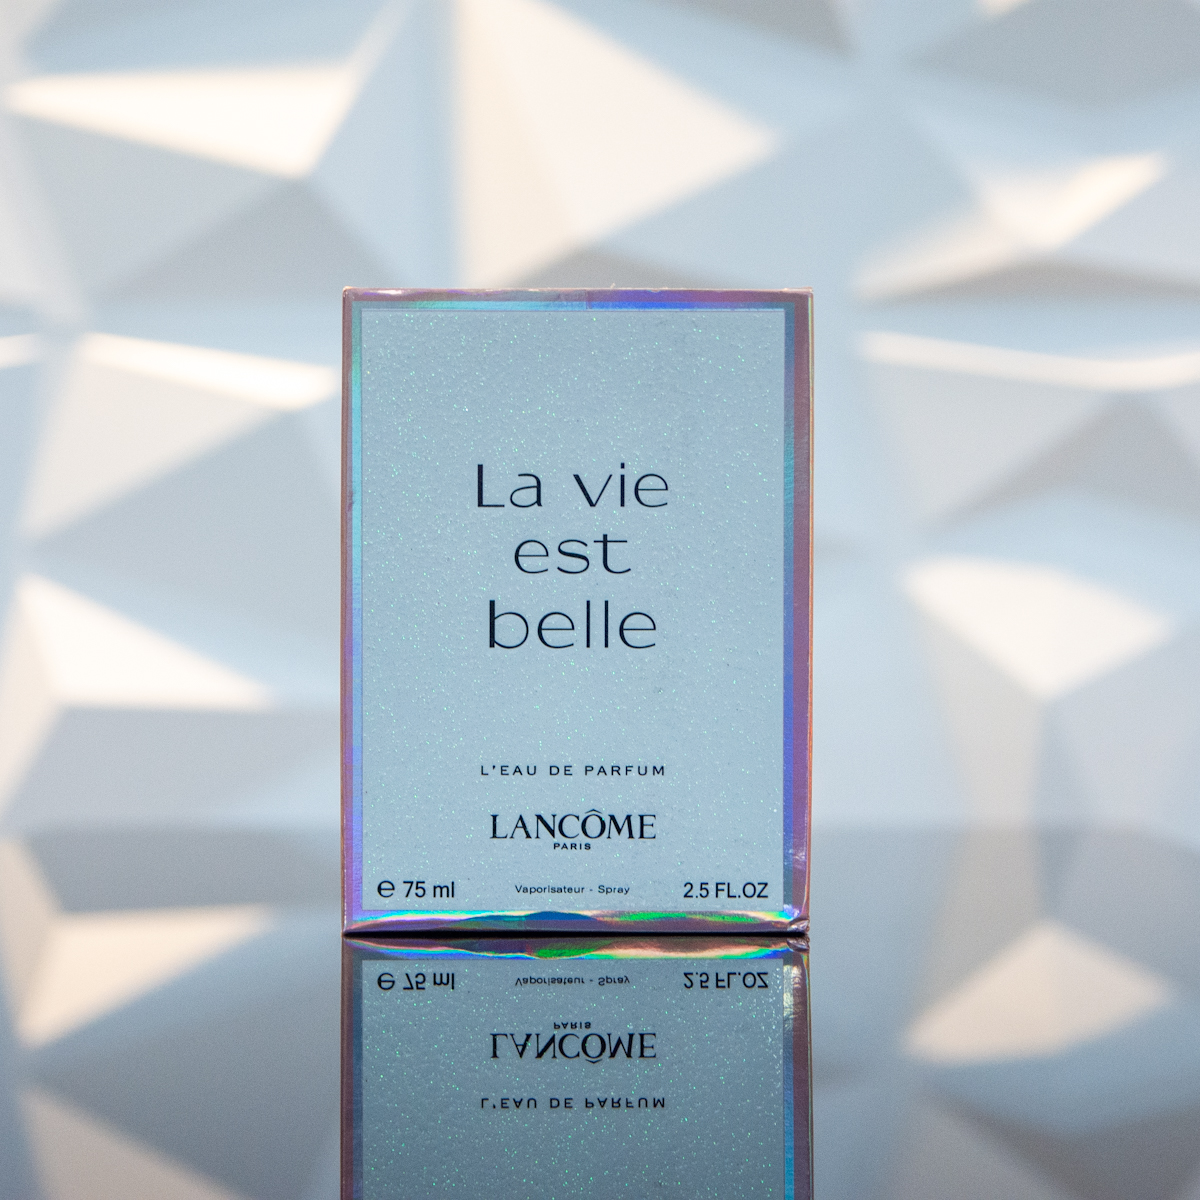 Perfume Coco Chanel Mademoiselle Para Mujer (Replica con Fragancia  Importada) - Luegopago